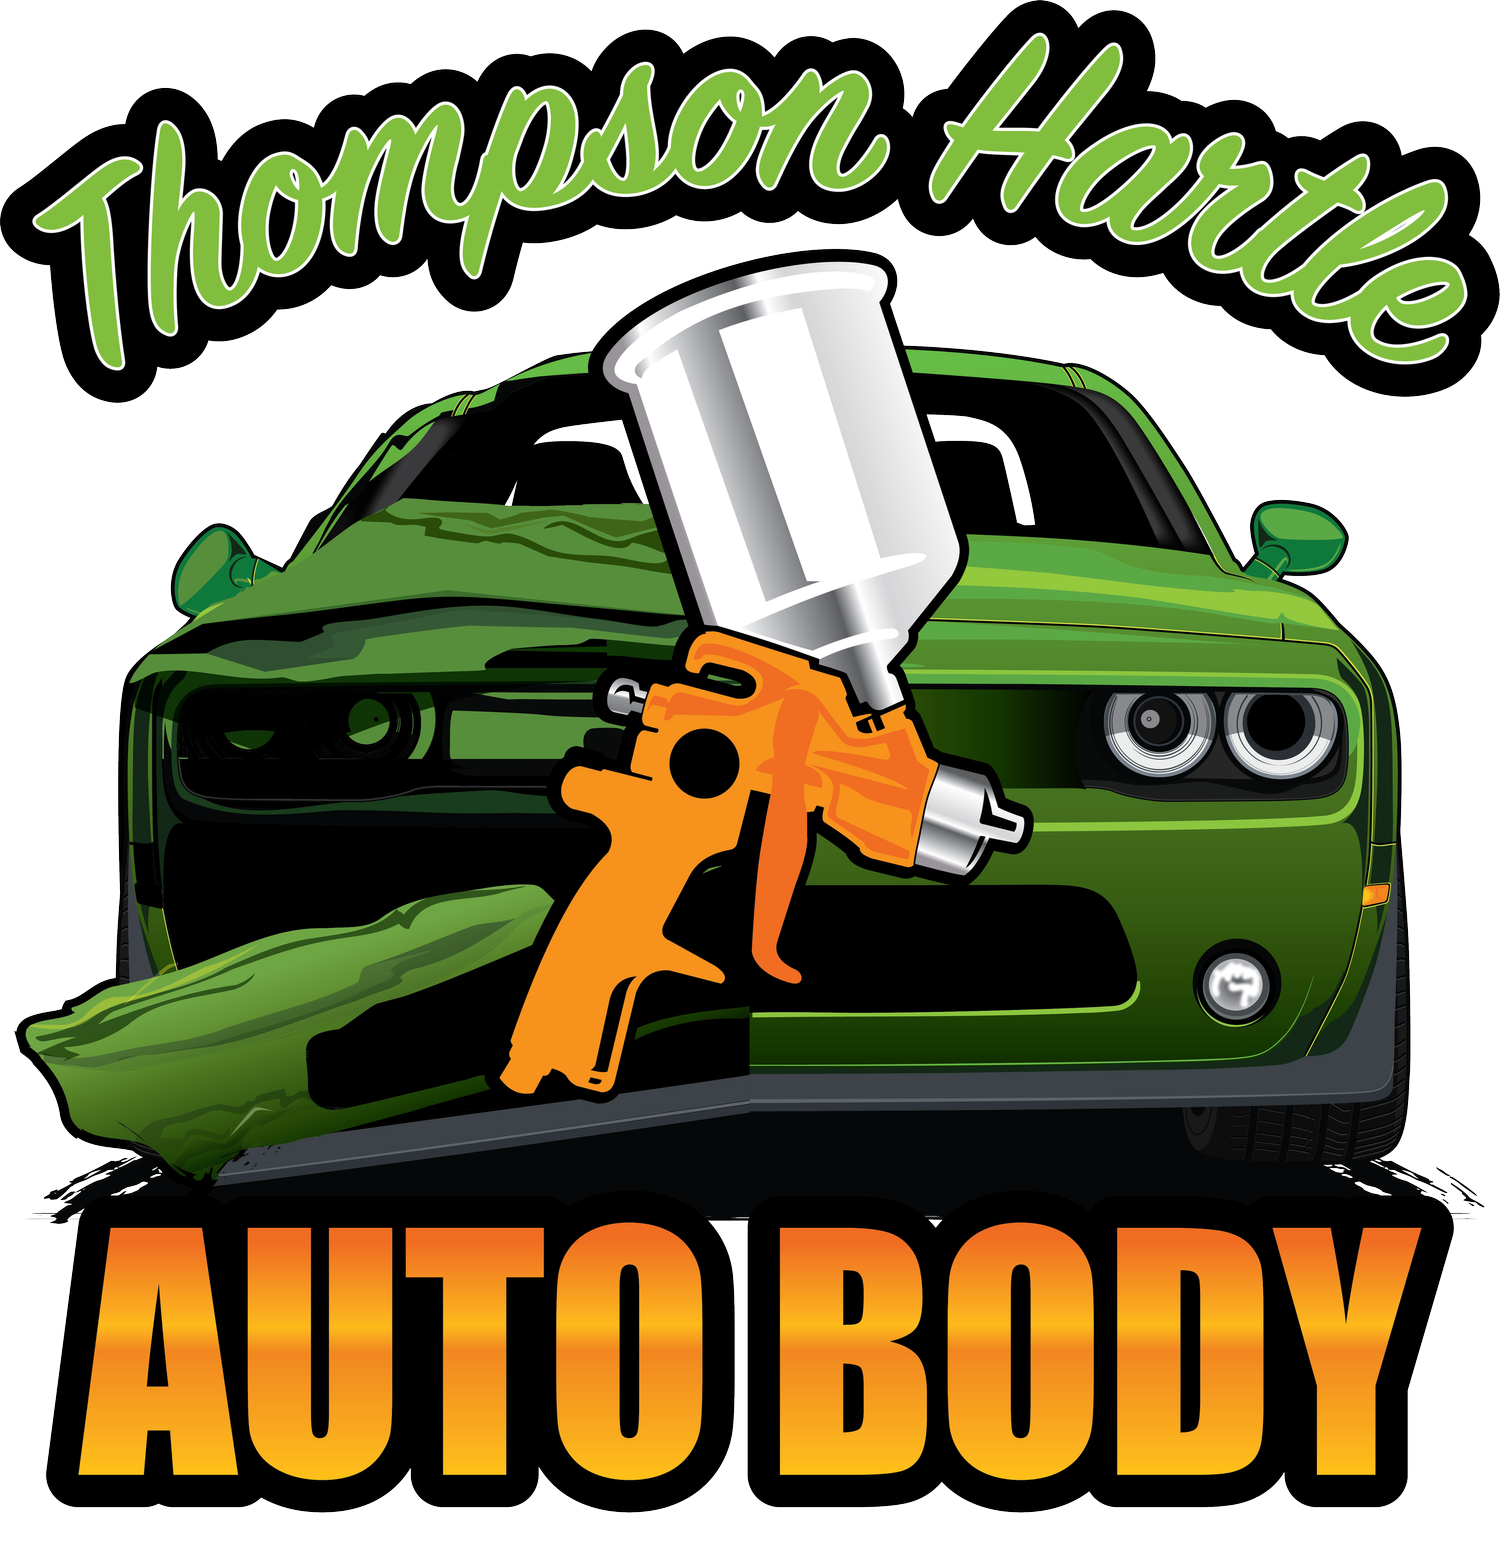 Thompson-Hartle Auto Body, Collision Repair, Kawartha Lakes